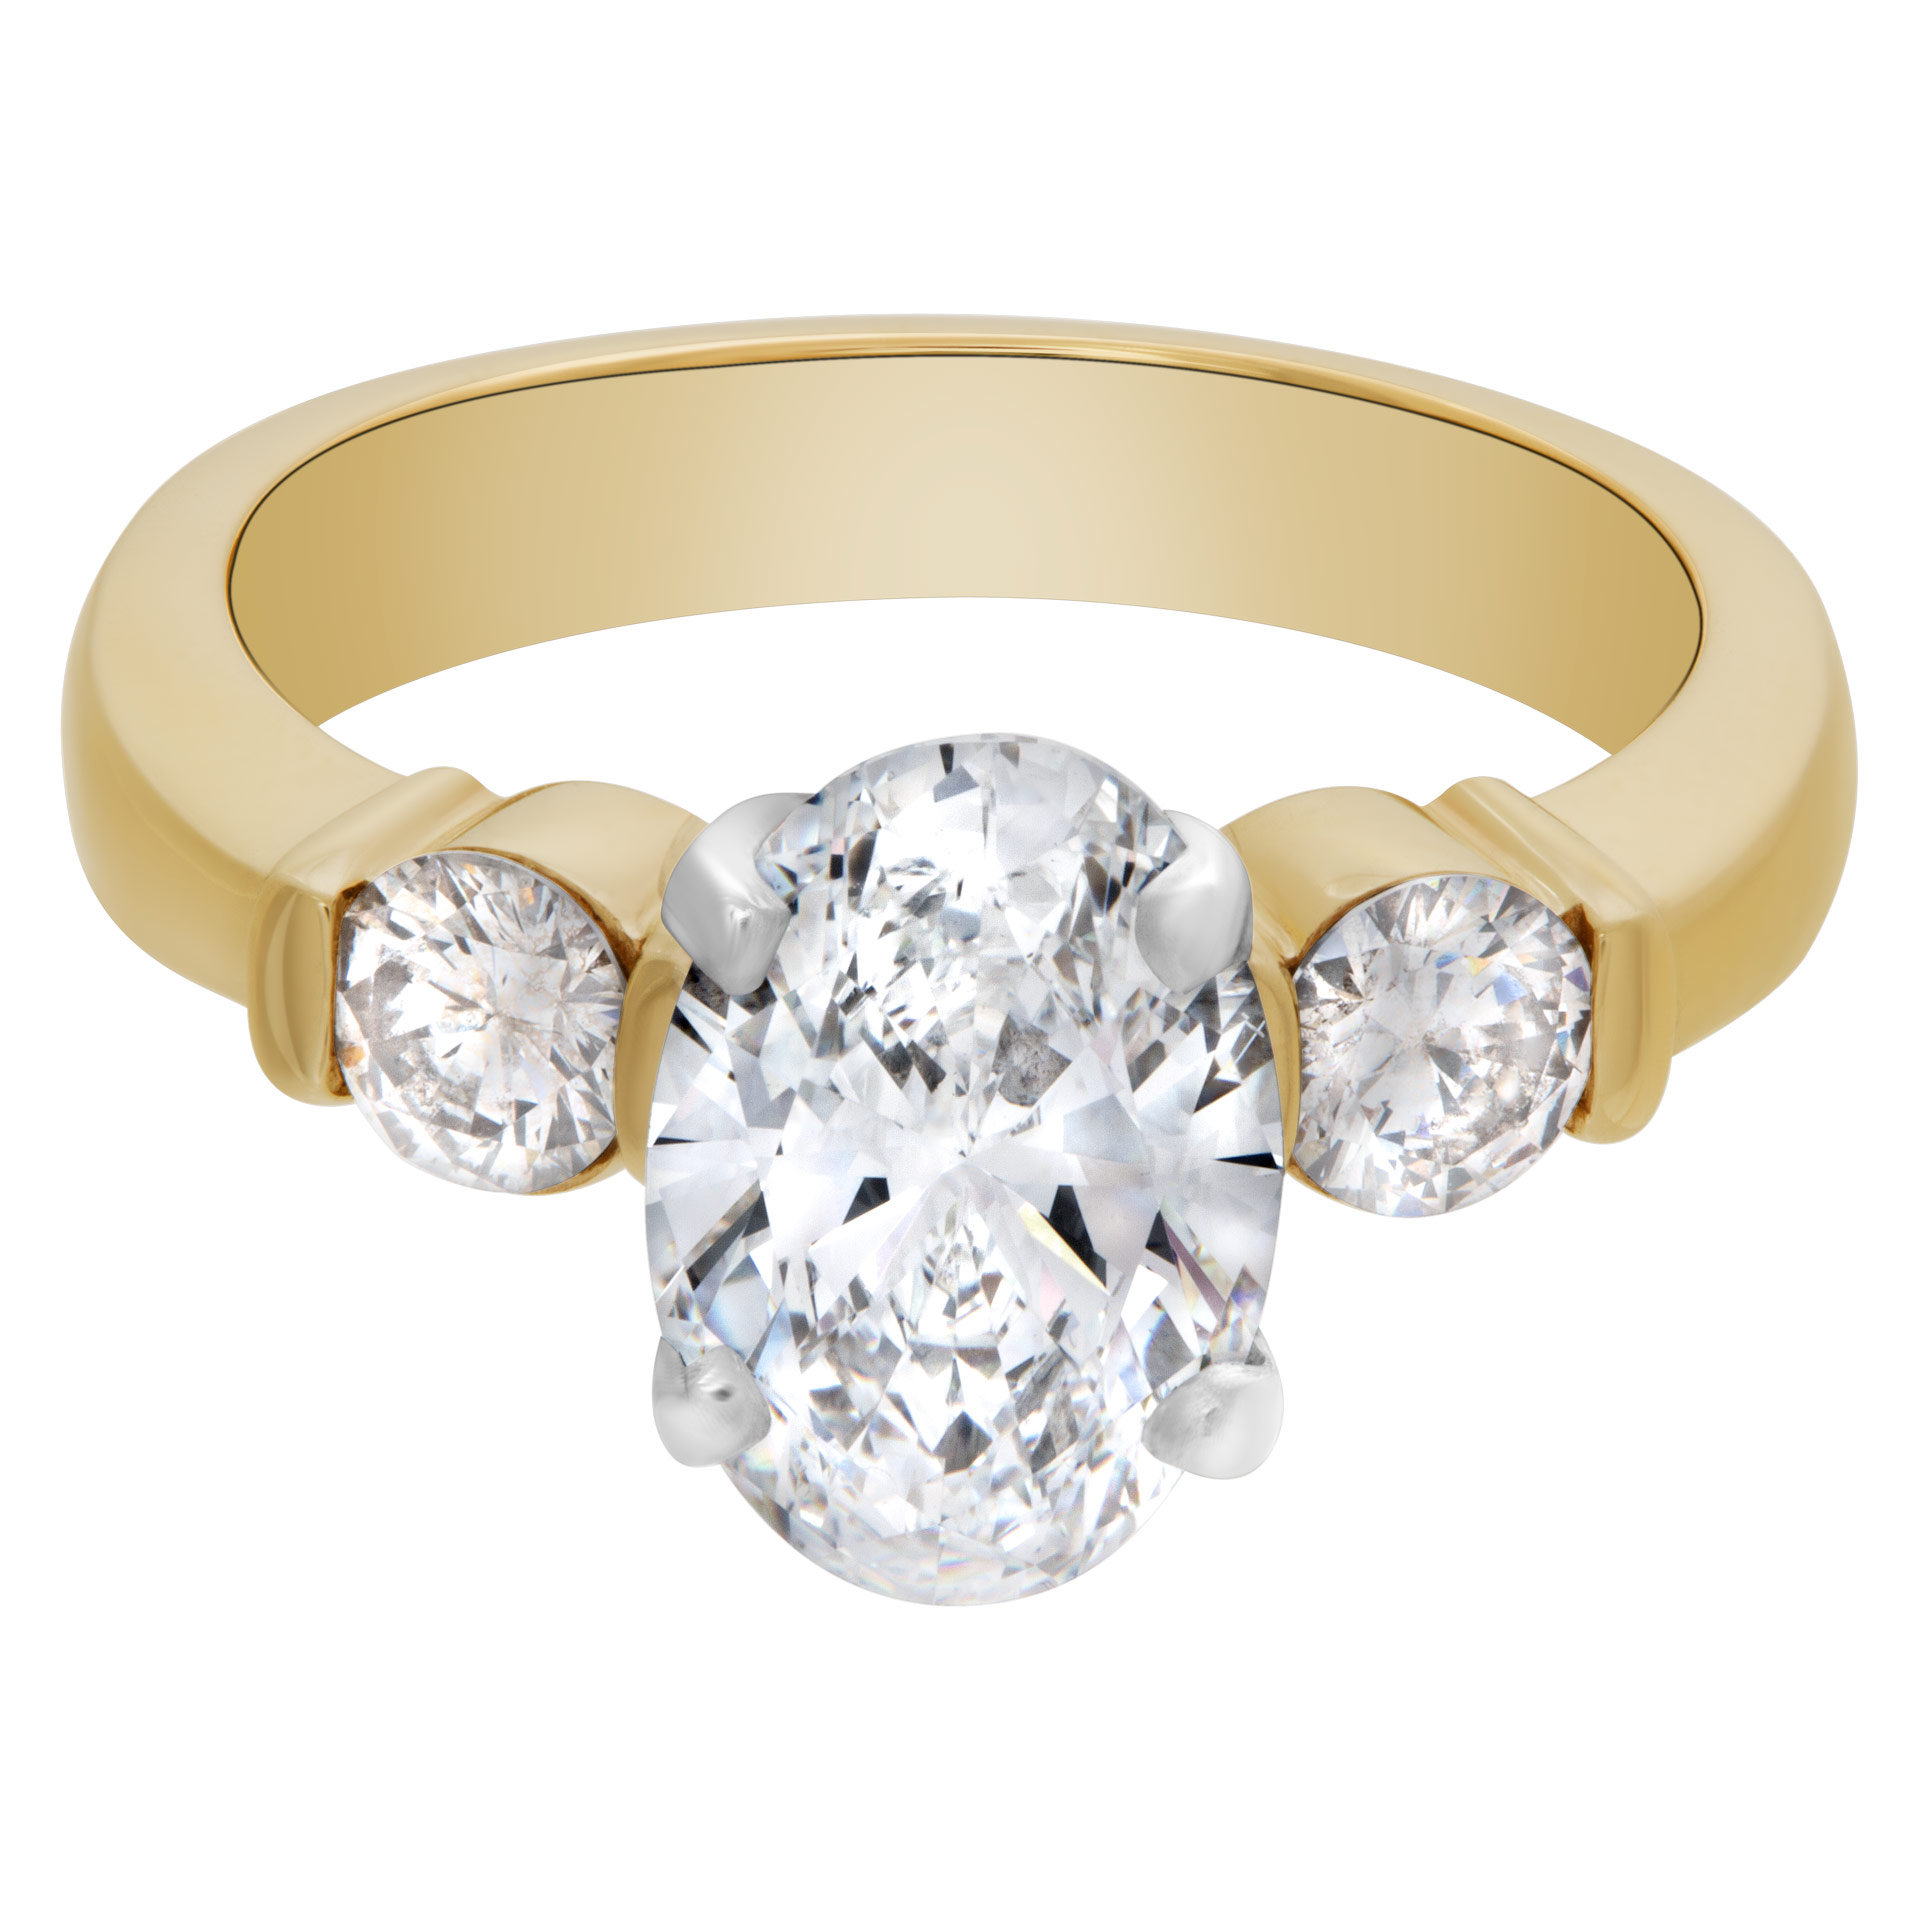 GIA certified oval brilliant cut diamond 2.31 carat (E color, SI1 clarity) image 1